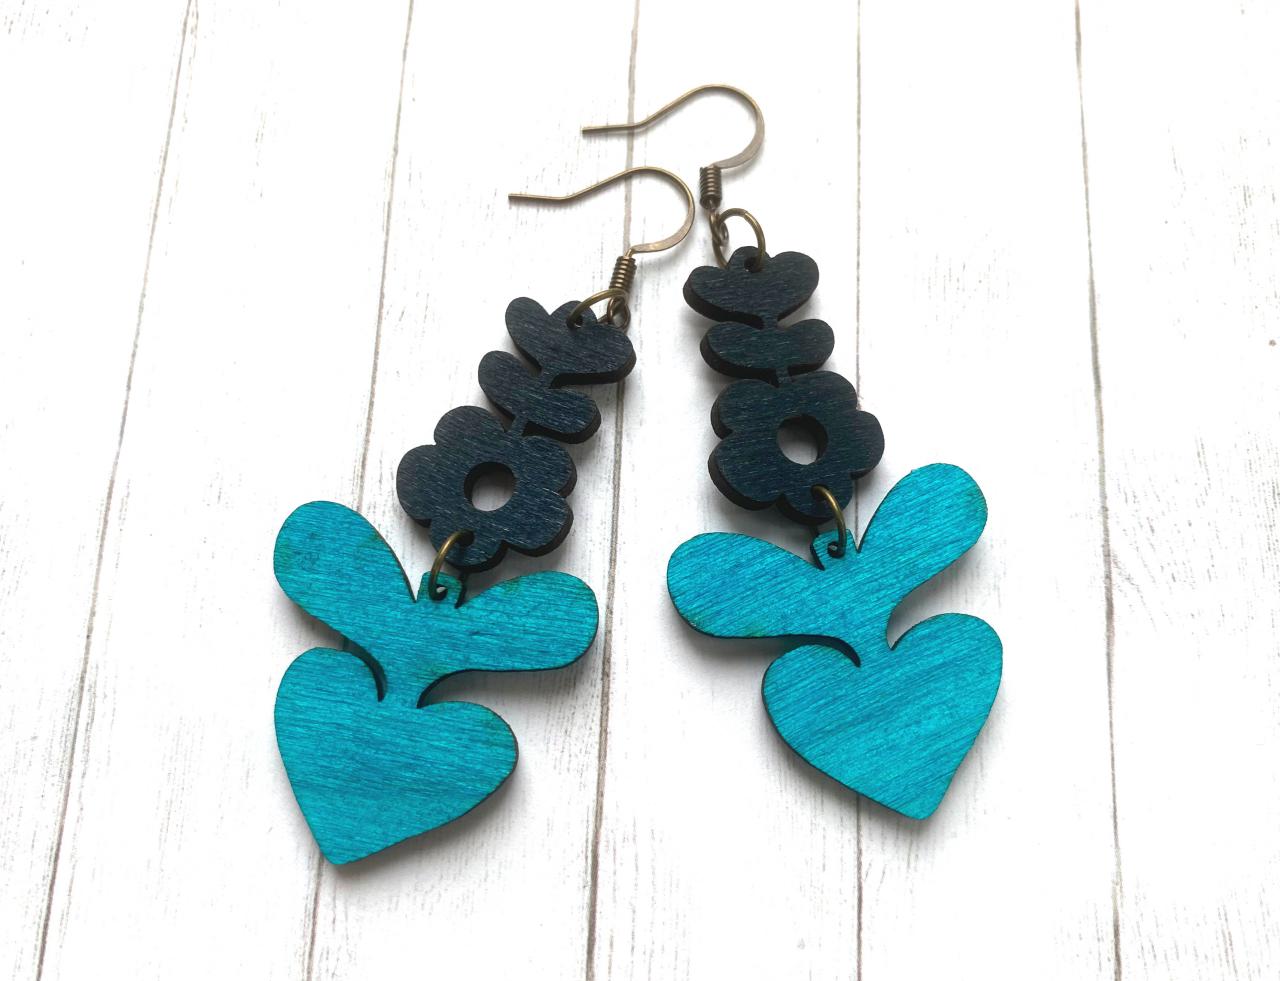 Scandinavian Statement Earrings With Black And Turquoise Wood Earrings, Selma Dreams